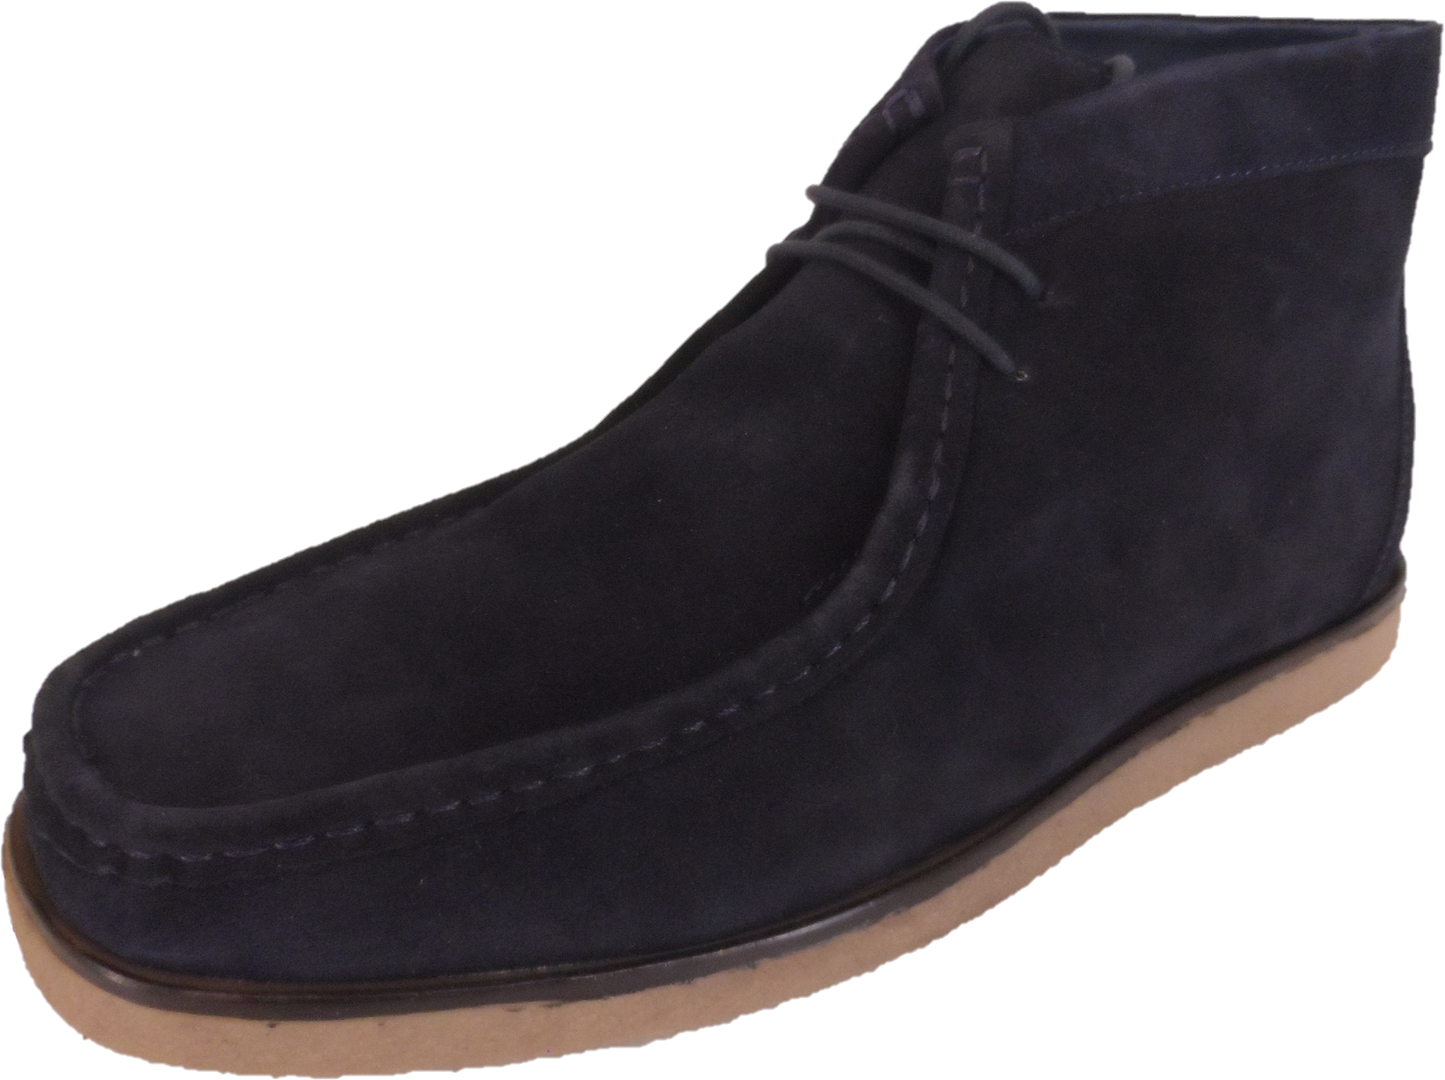 Roamers botas de ante real estilo walibee azul marino retro para hombre